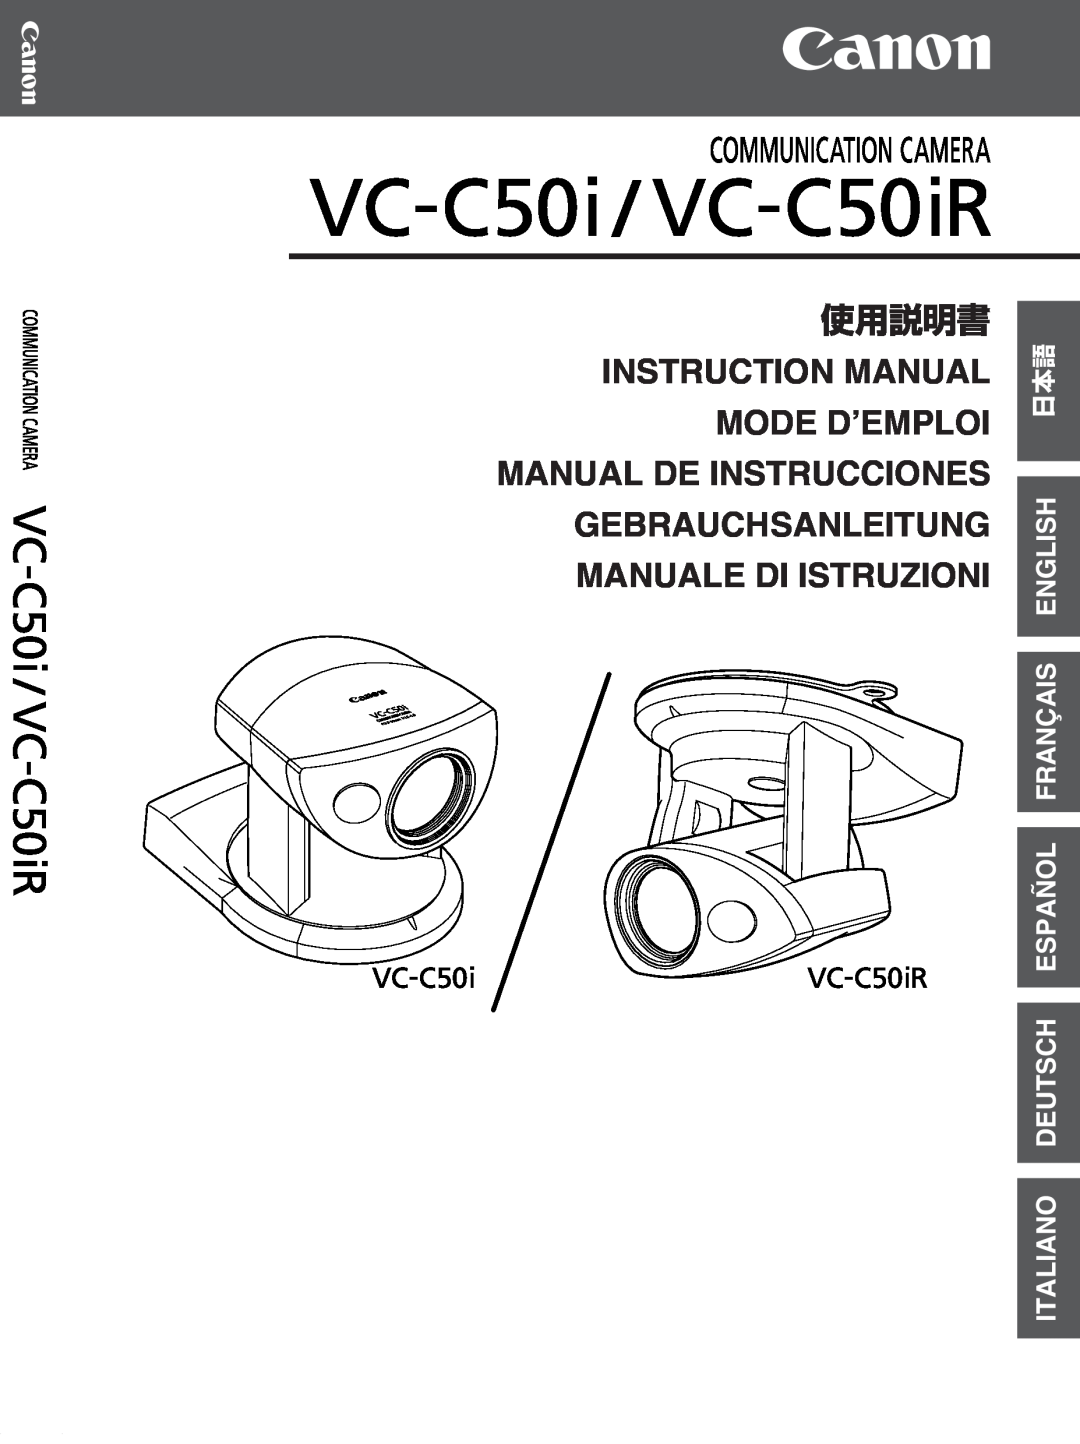 Canon VC-C50i instruction manual Instruction Manual Mode D’Emploi, Manual De Instrucciones Gebrauchsanleitung, 日 語本, 使用説明書 